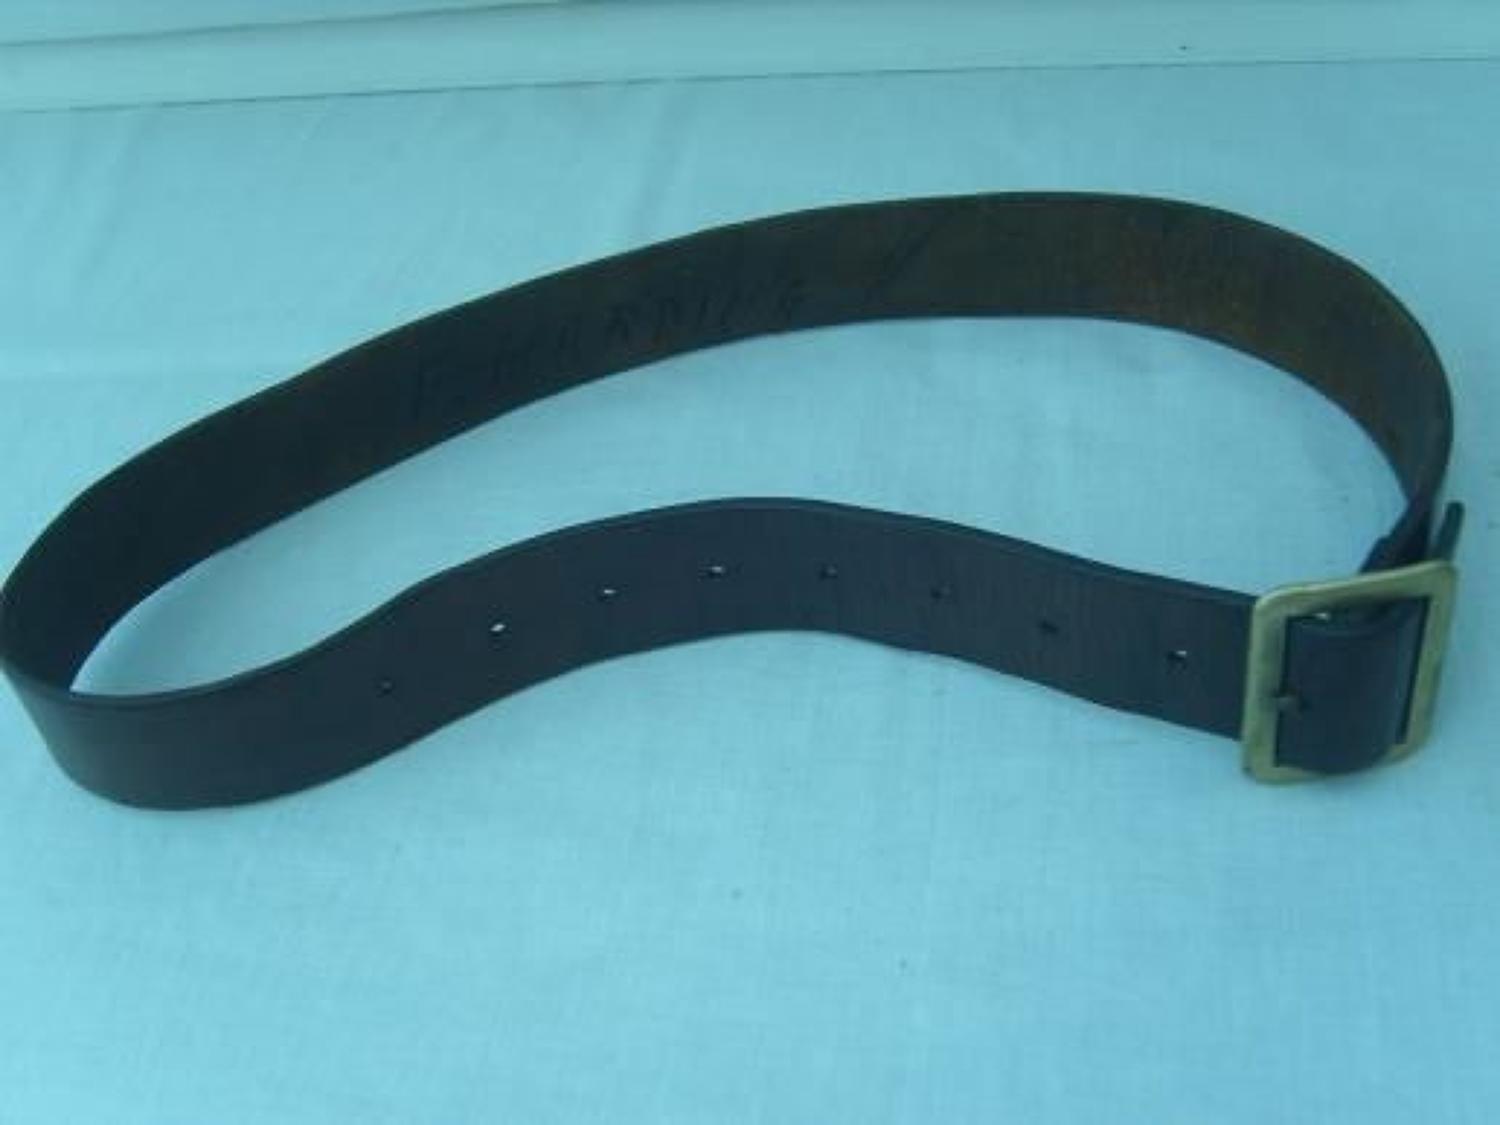 1903 pattern British Army Leather Belt.